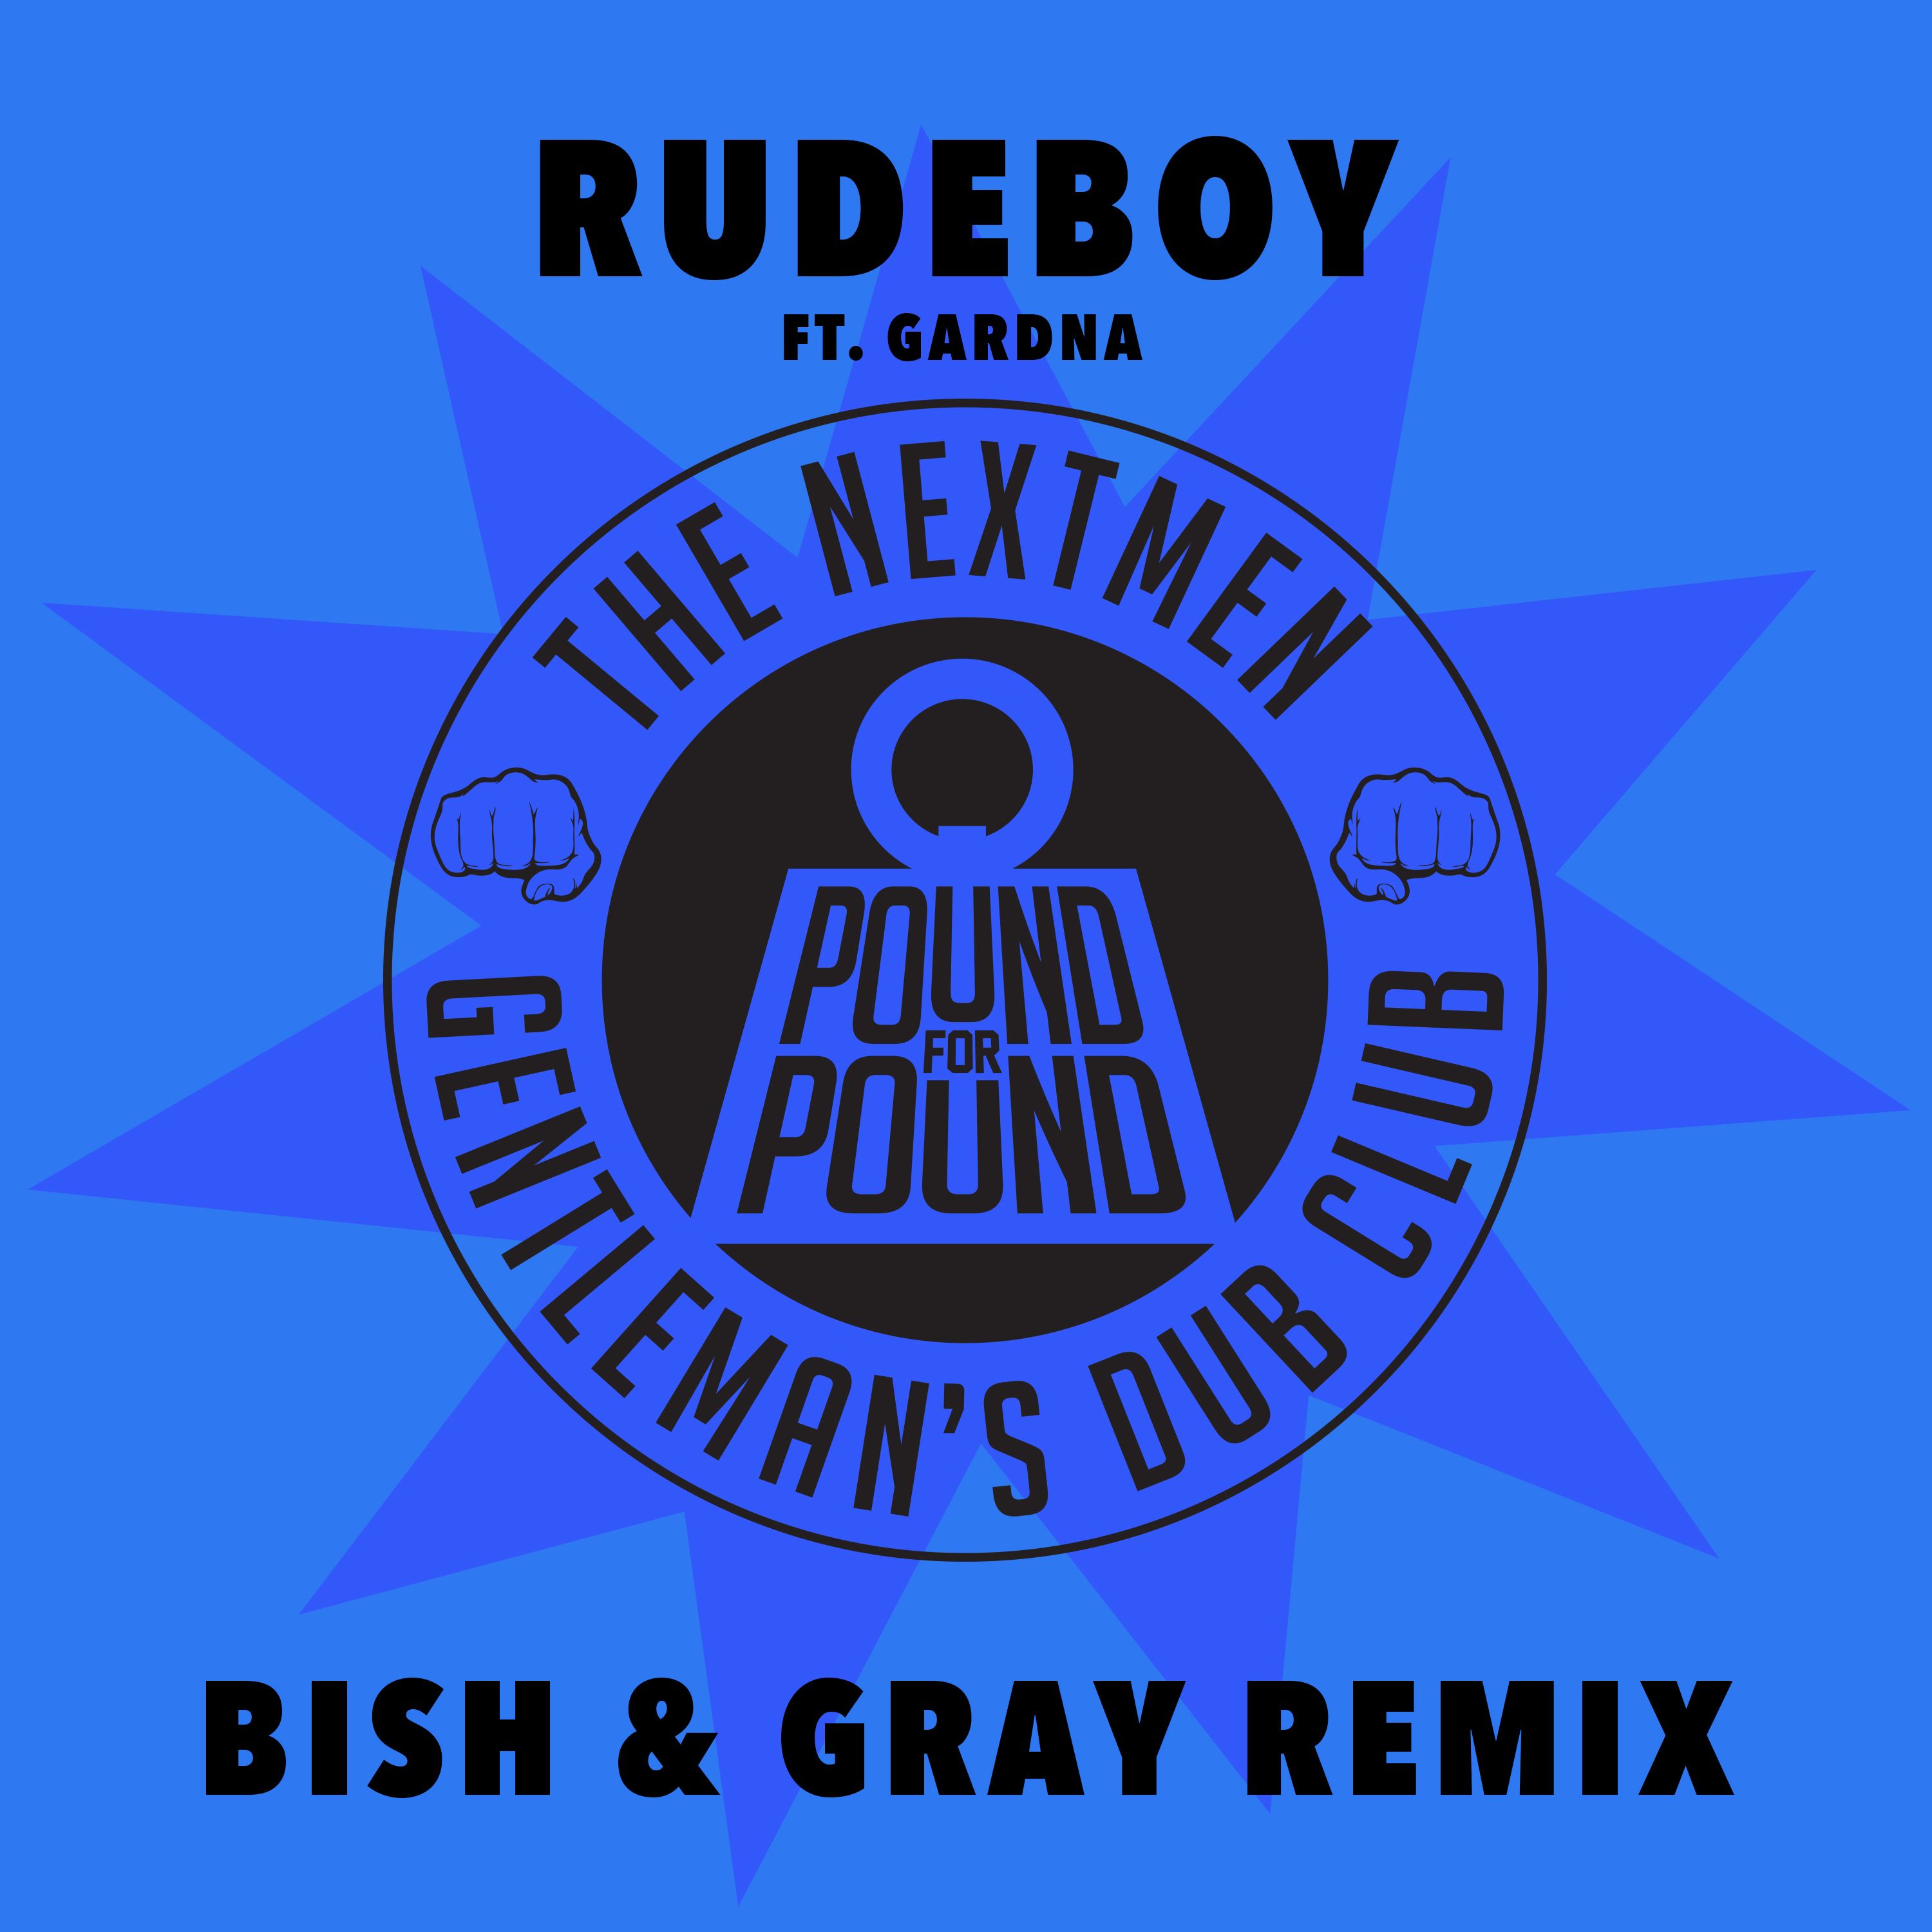 Gentleman's Dub Club x The Nextmen - Rudeboy ft. Gardna (Bish & Gray Remix)